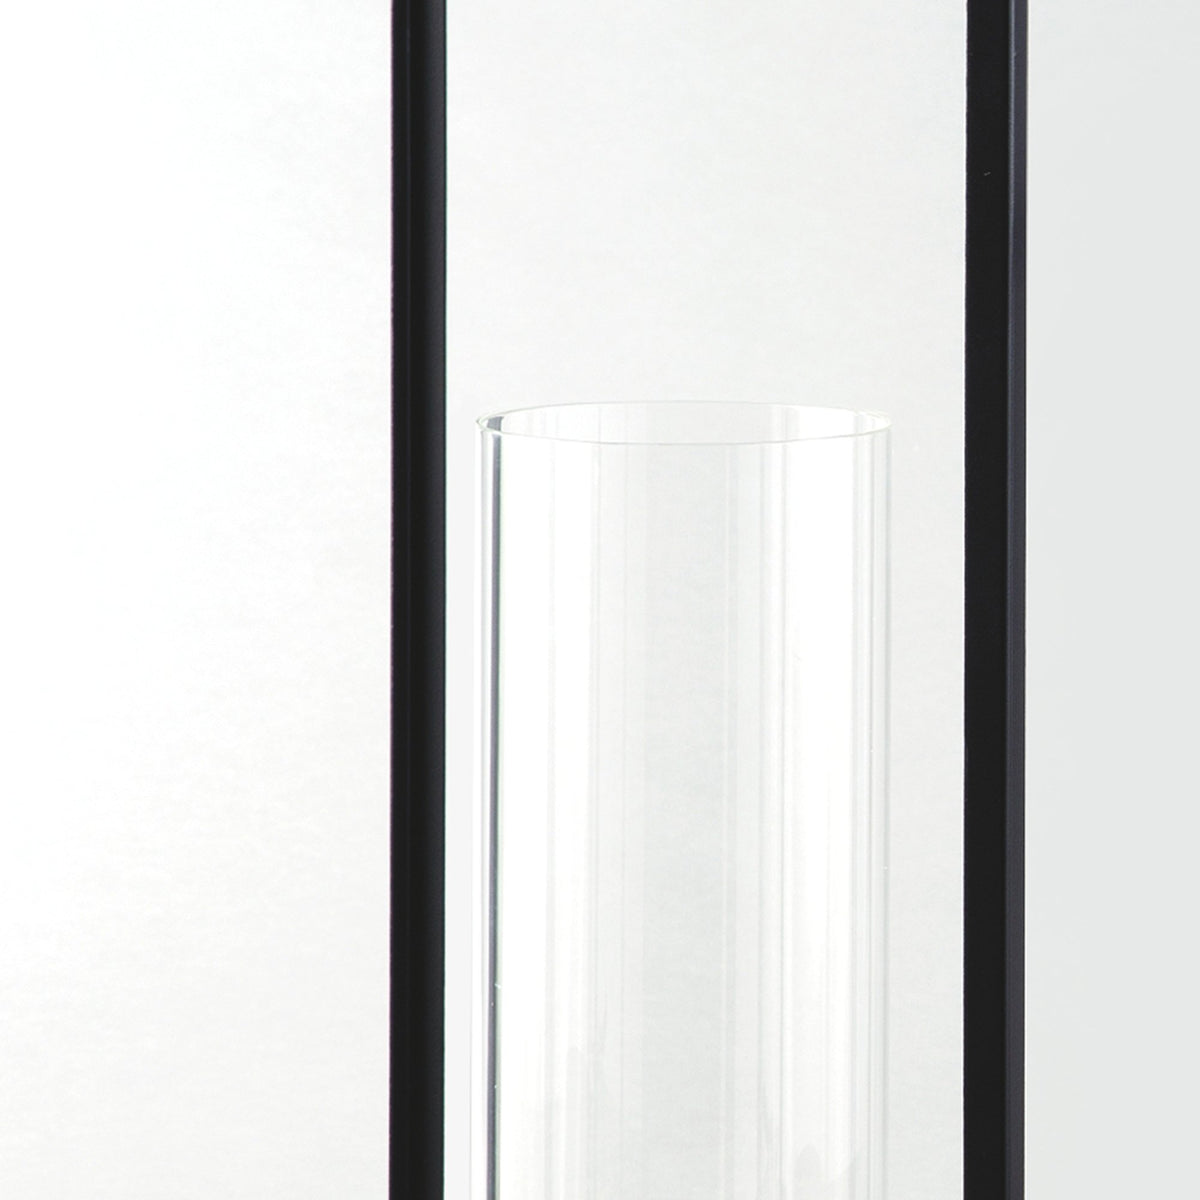 Metal Frame Lantern with Cylindrical Glass Hurricane, Set of 2, Black - BM231424